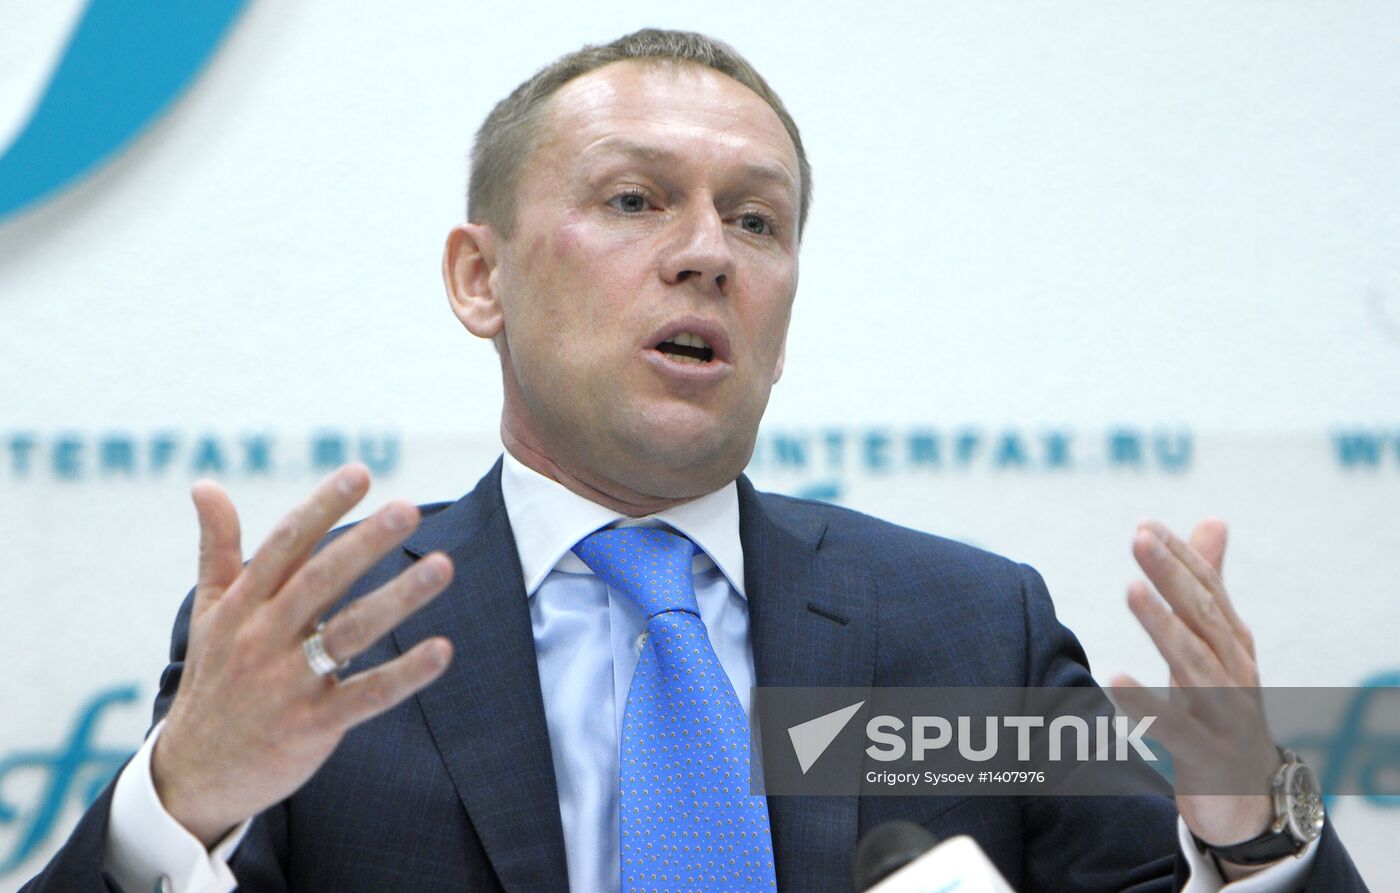 Duma deputy Lugovoy gives news conference on Litvinenko's case